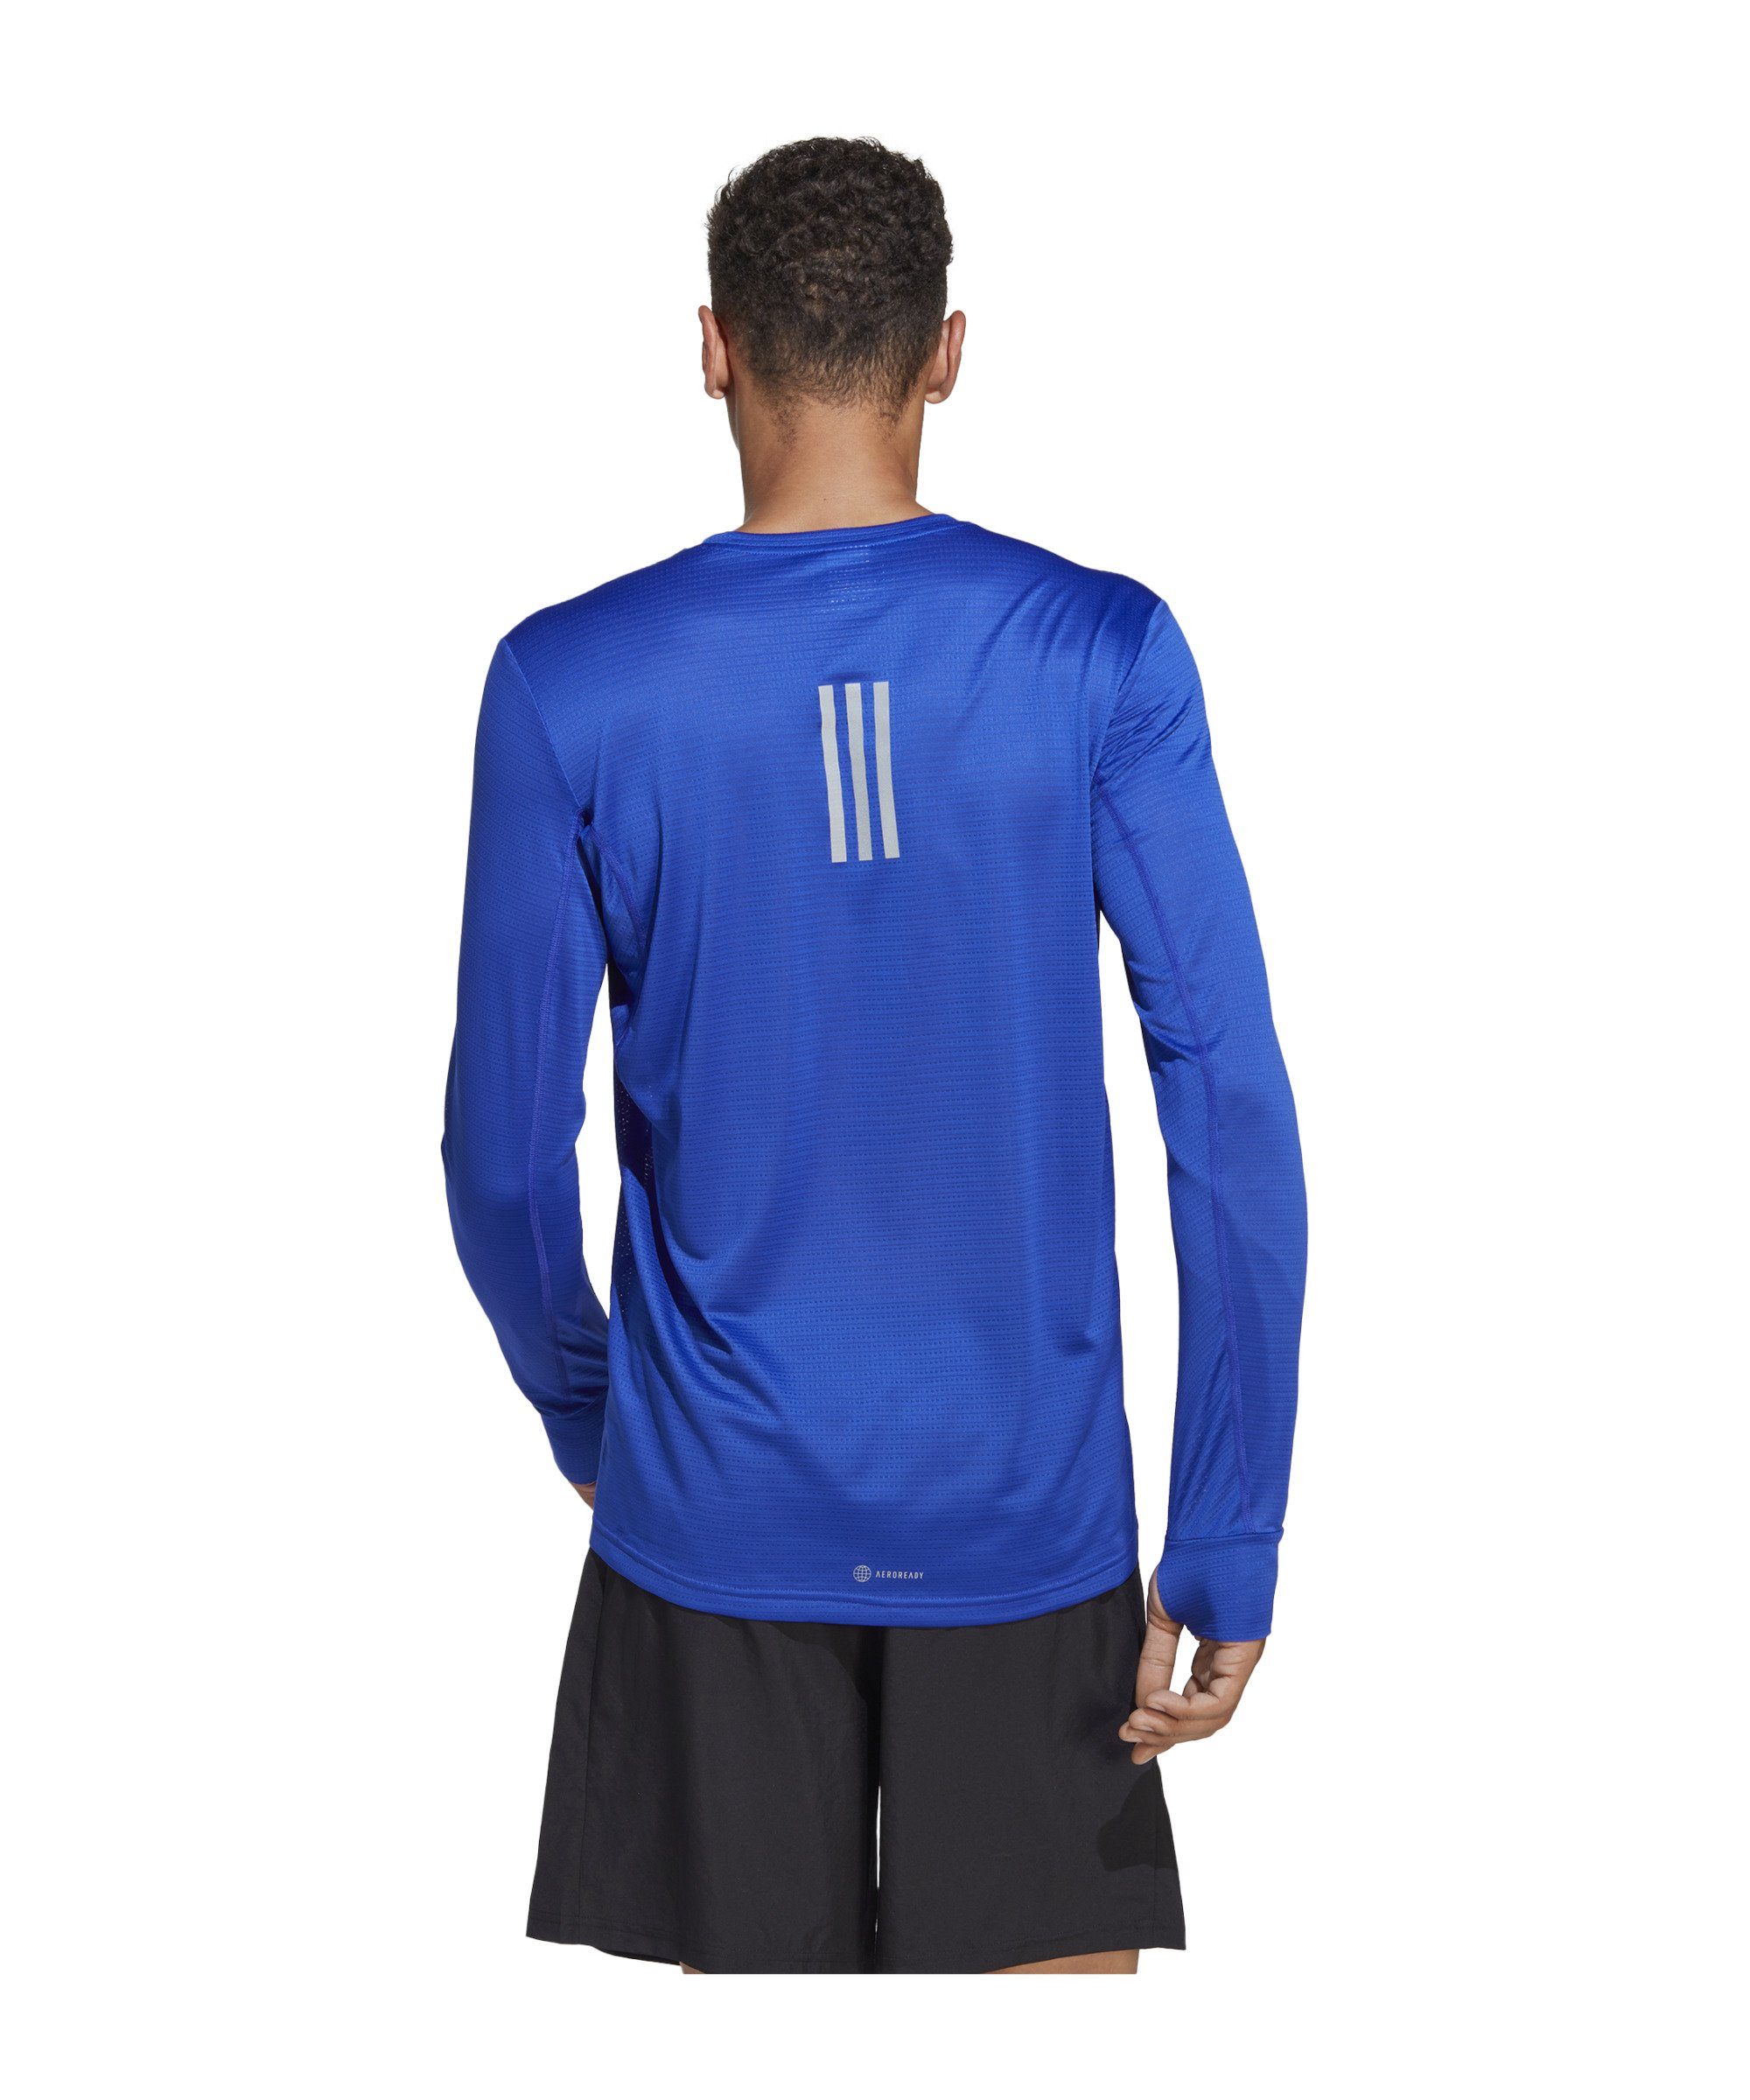 adidas Performance Lauftop Own the Run Sweatshirt blau default